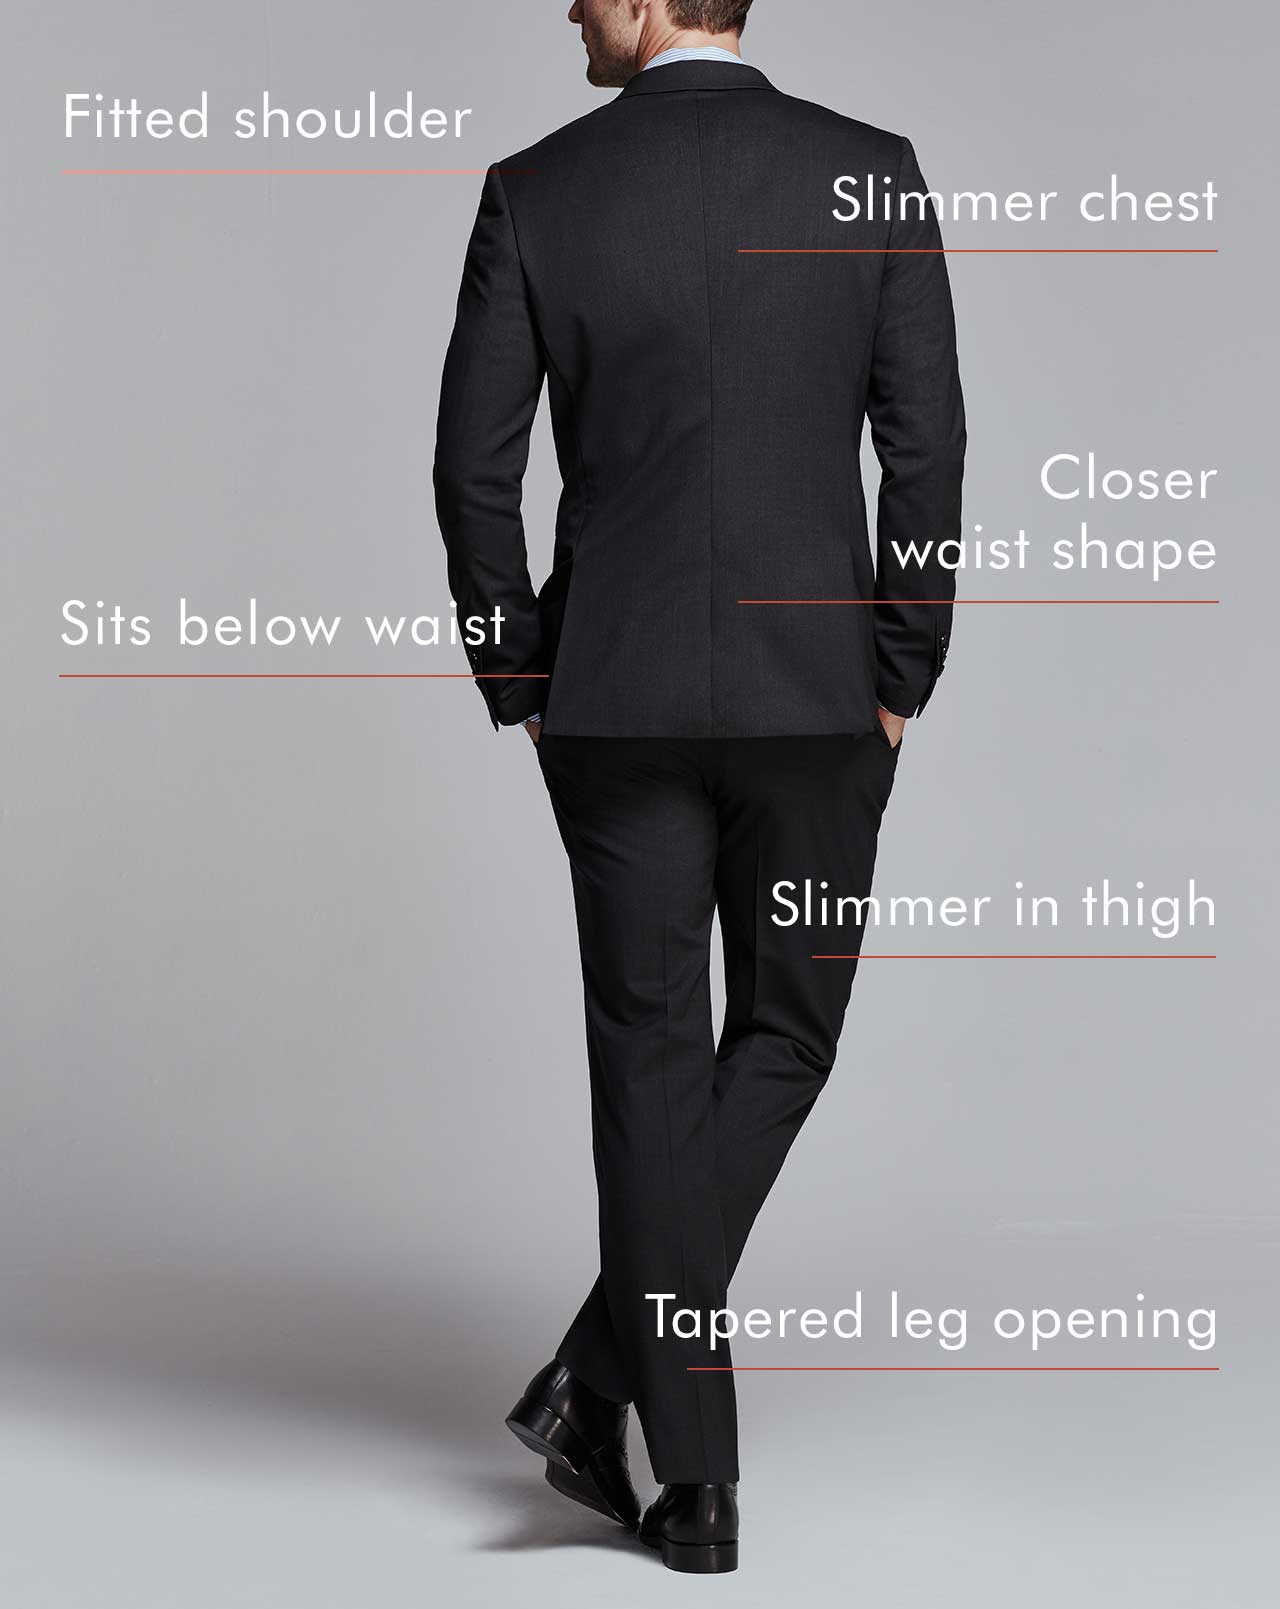 Custom Fit vs. Slim Fit vs. Tailored Fit Suits